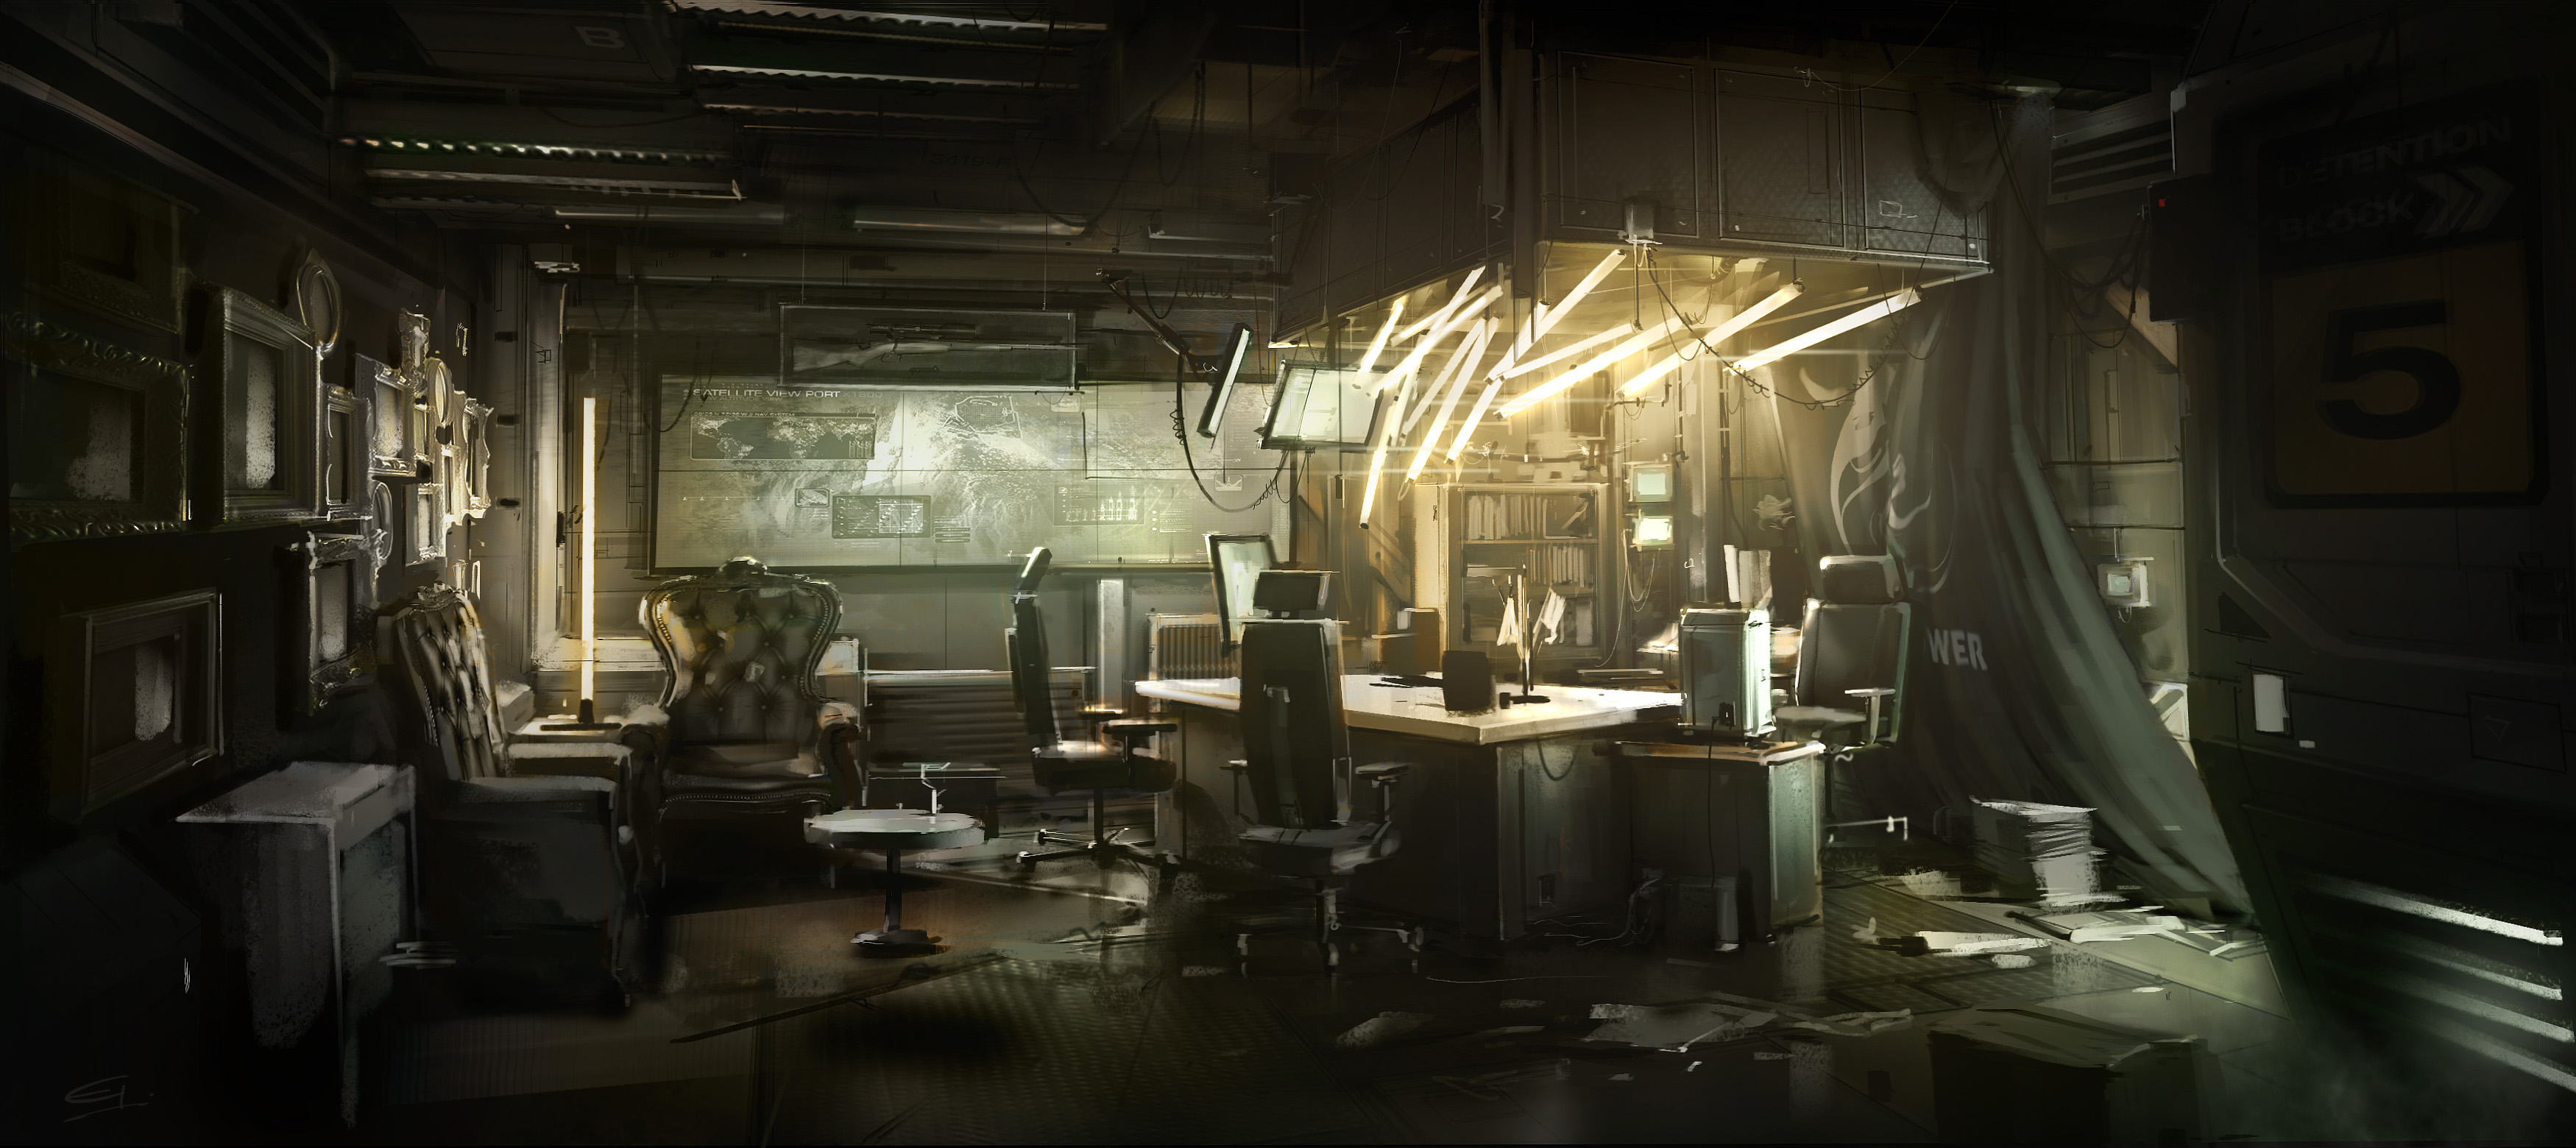 66 Deus Ex HD Wallpapers | Backgrounds - Wallpaper Abyss